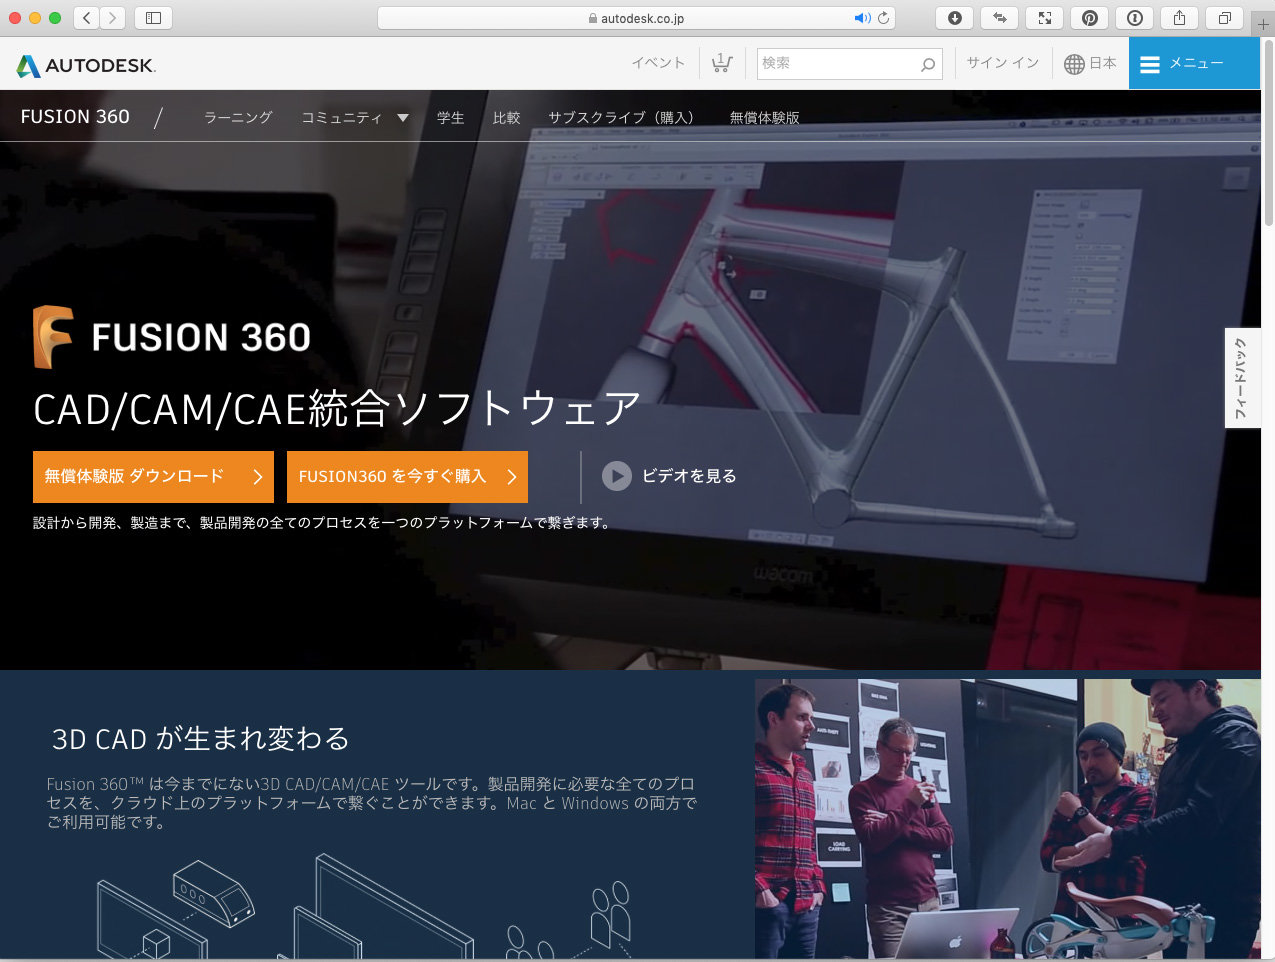 }1@uFusion 360vWebTCgihttps://www.autodesk.co.jp/products/fusion-360/overviewjmNbNŊgn